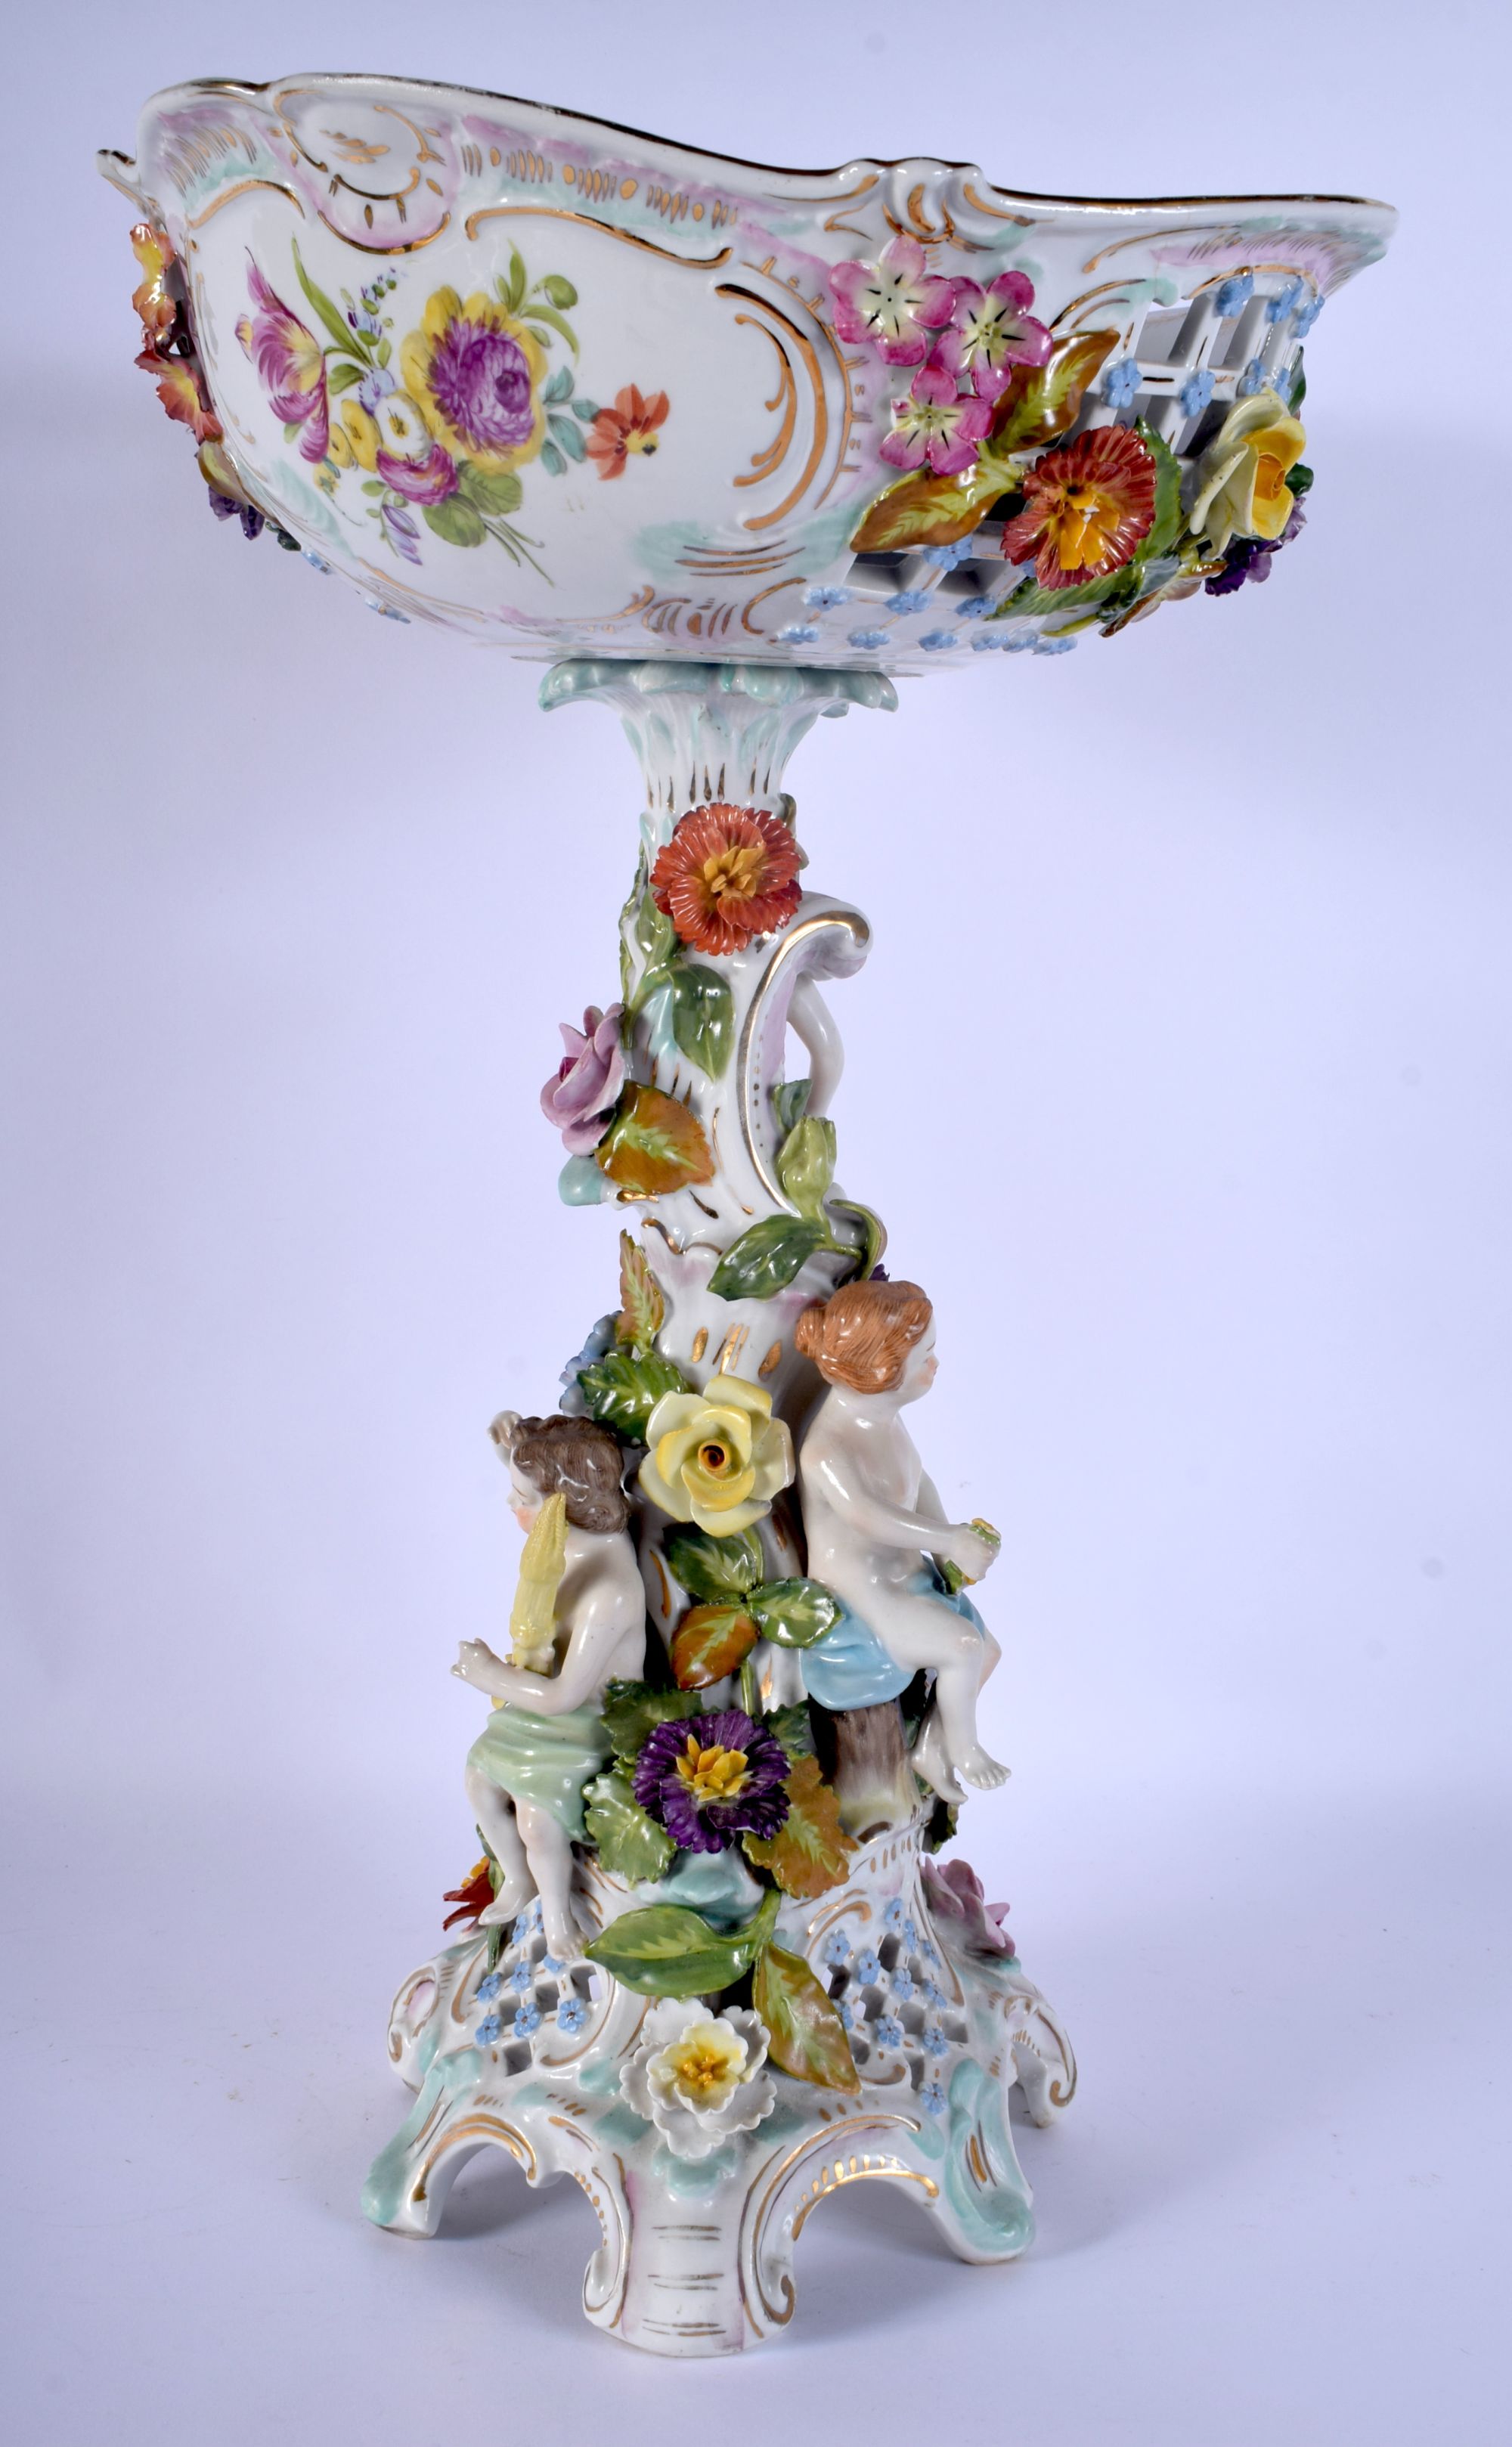 A LARGE ANTIQUE GERMAN PORCELAIN COMPORT modelled with figures under a floral bowl. 43 cm x 22 cm. - Image 2 of 7